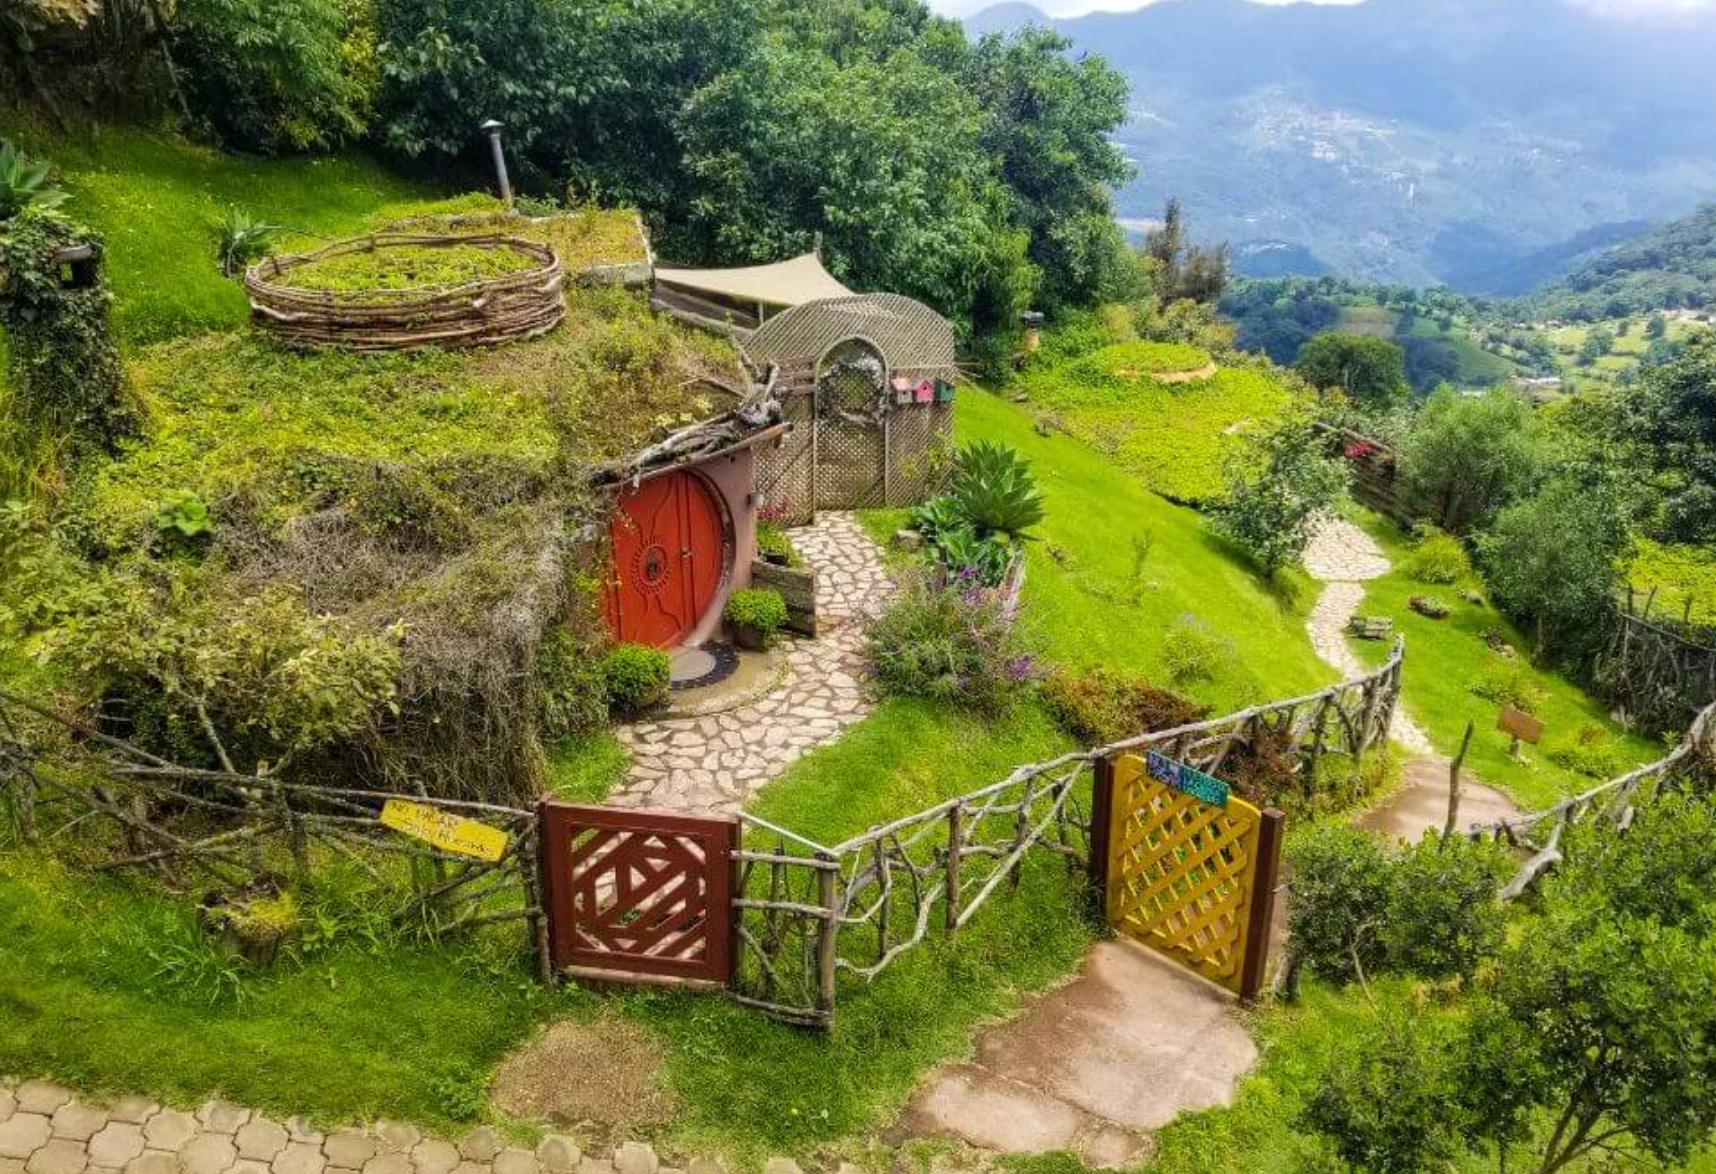 Hobbitenango cabins are build into the mountain side high above Antigua, Guatemala